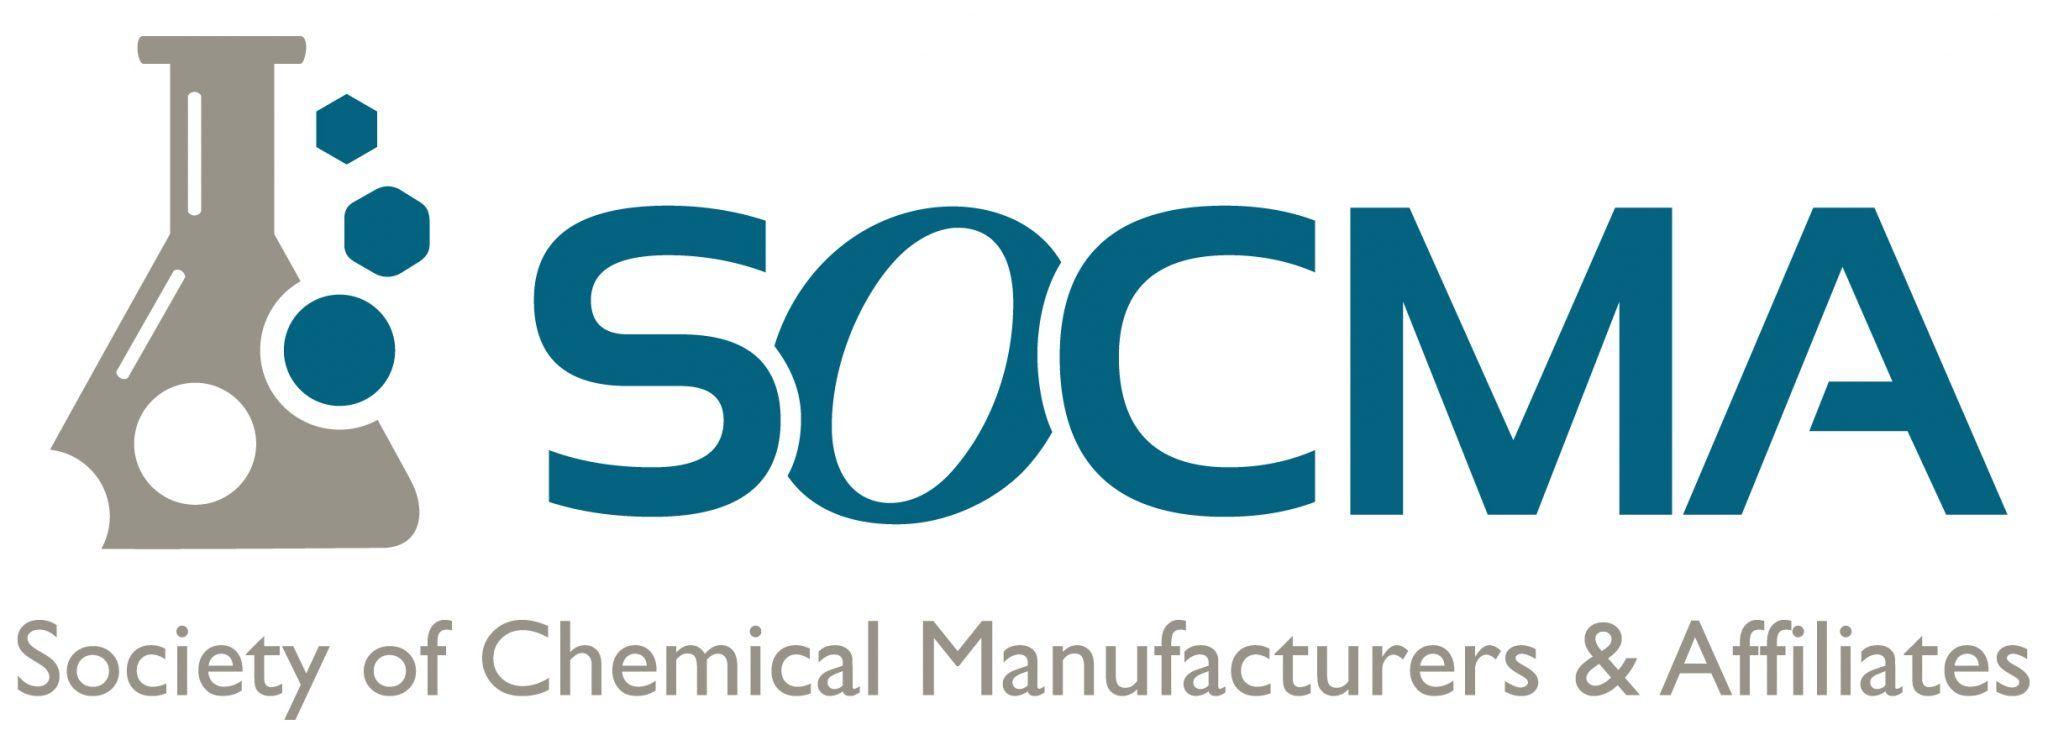 Chemcel Logo - MFG Chemical